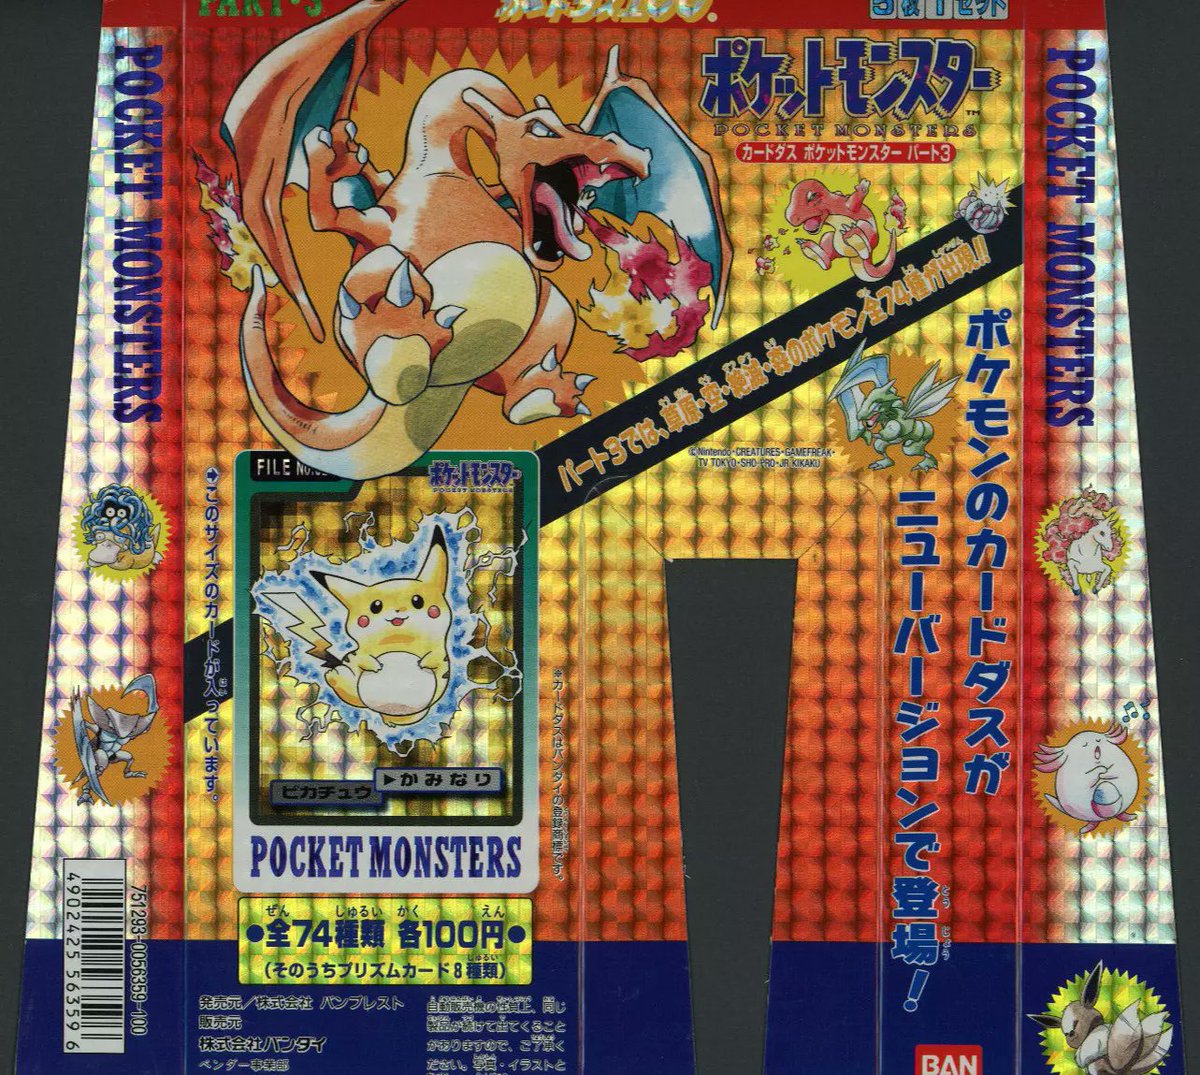 1997 Pokemon Charizard & Pikachu Carddass Display Bandai Mount NM/LP
Ad: ebay.com/itm/1763693598…